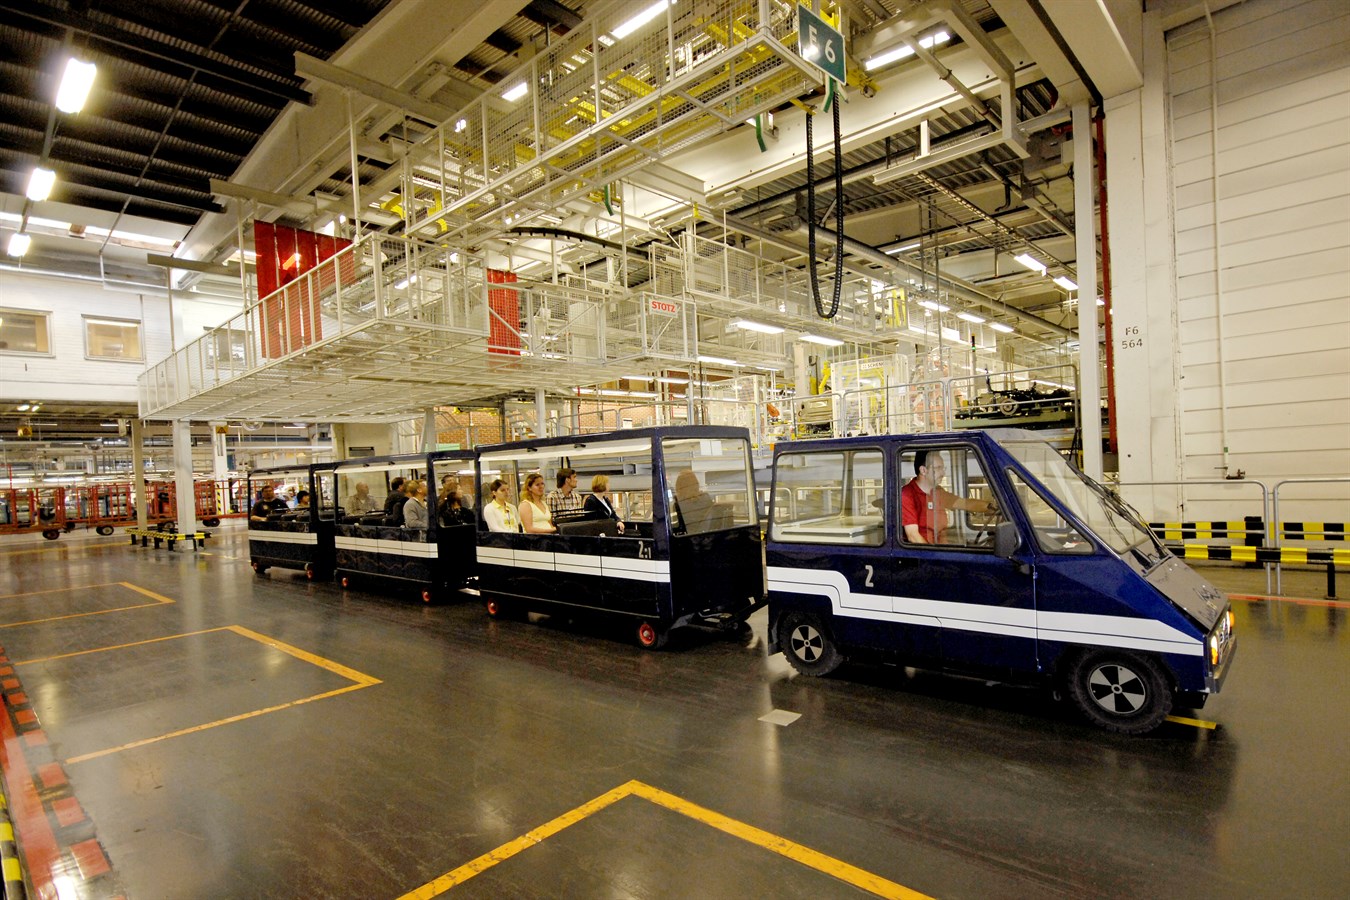 The Blue train takes the visitors around in the Volvo Cars Torslanda plant